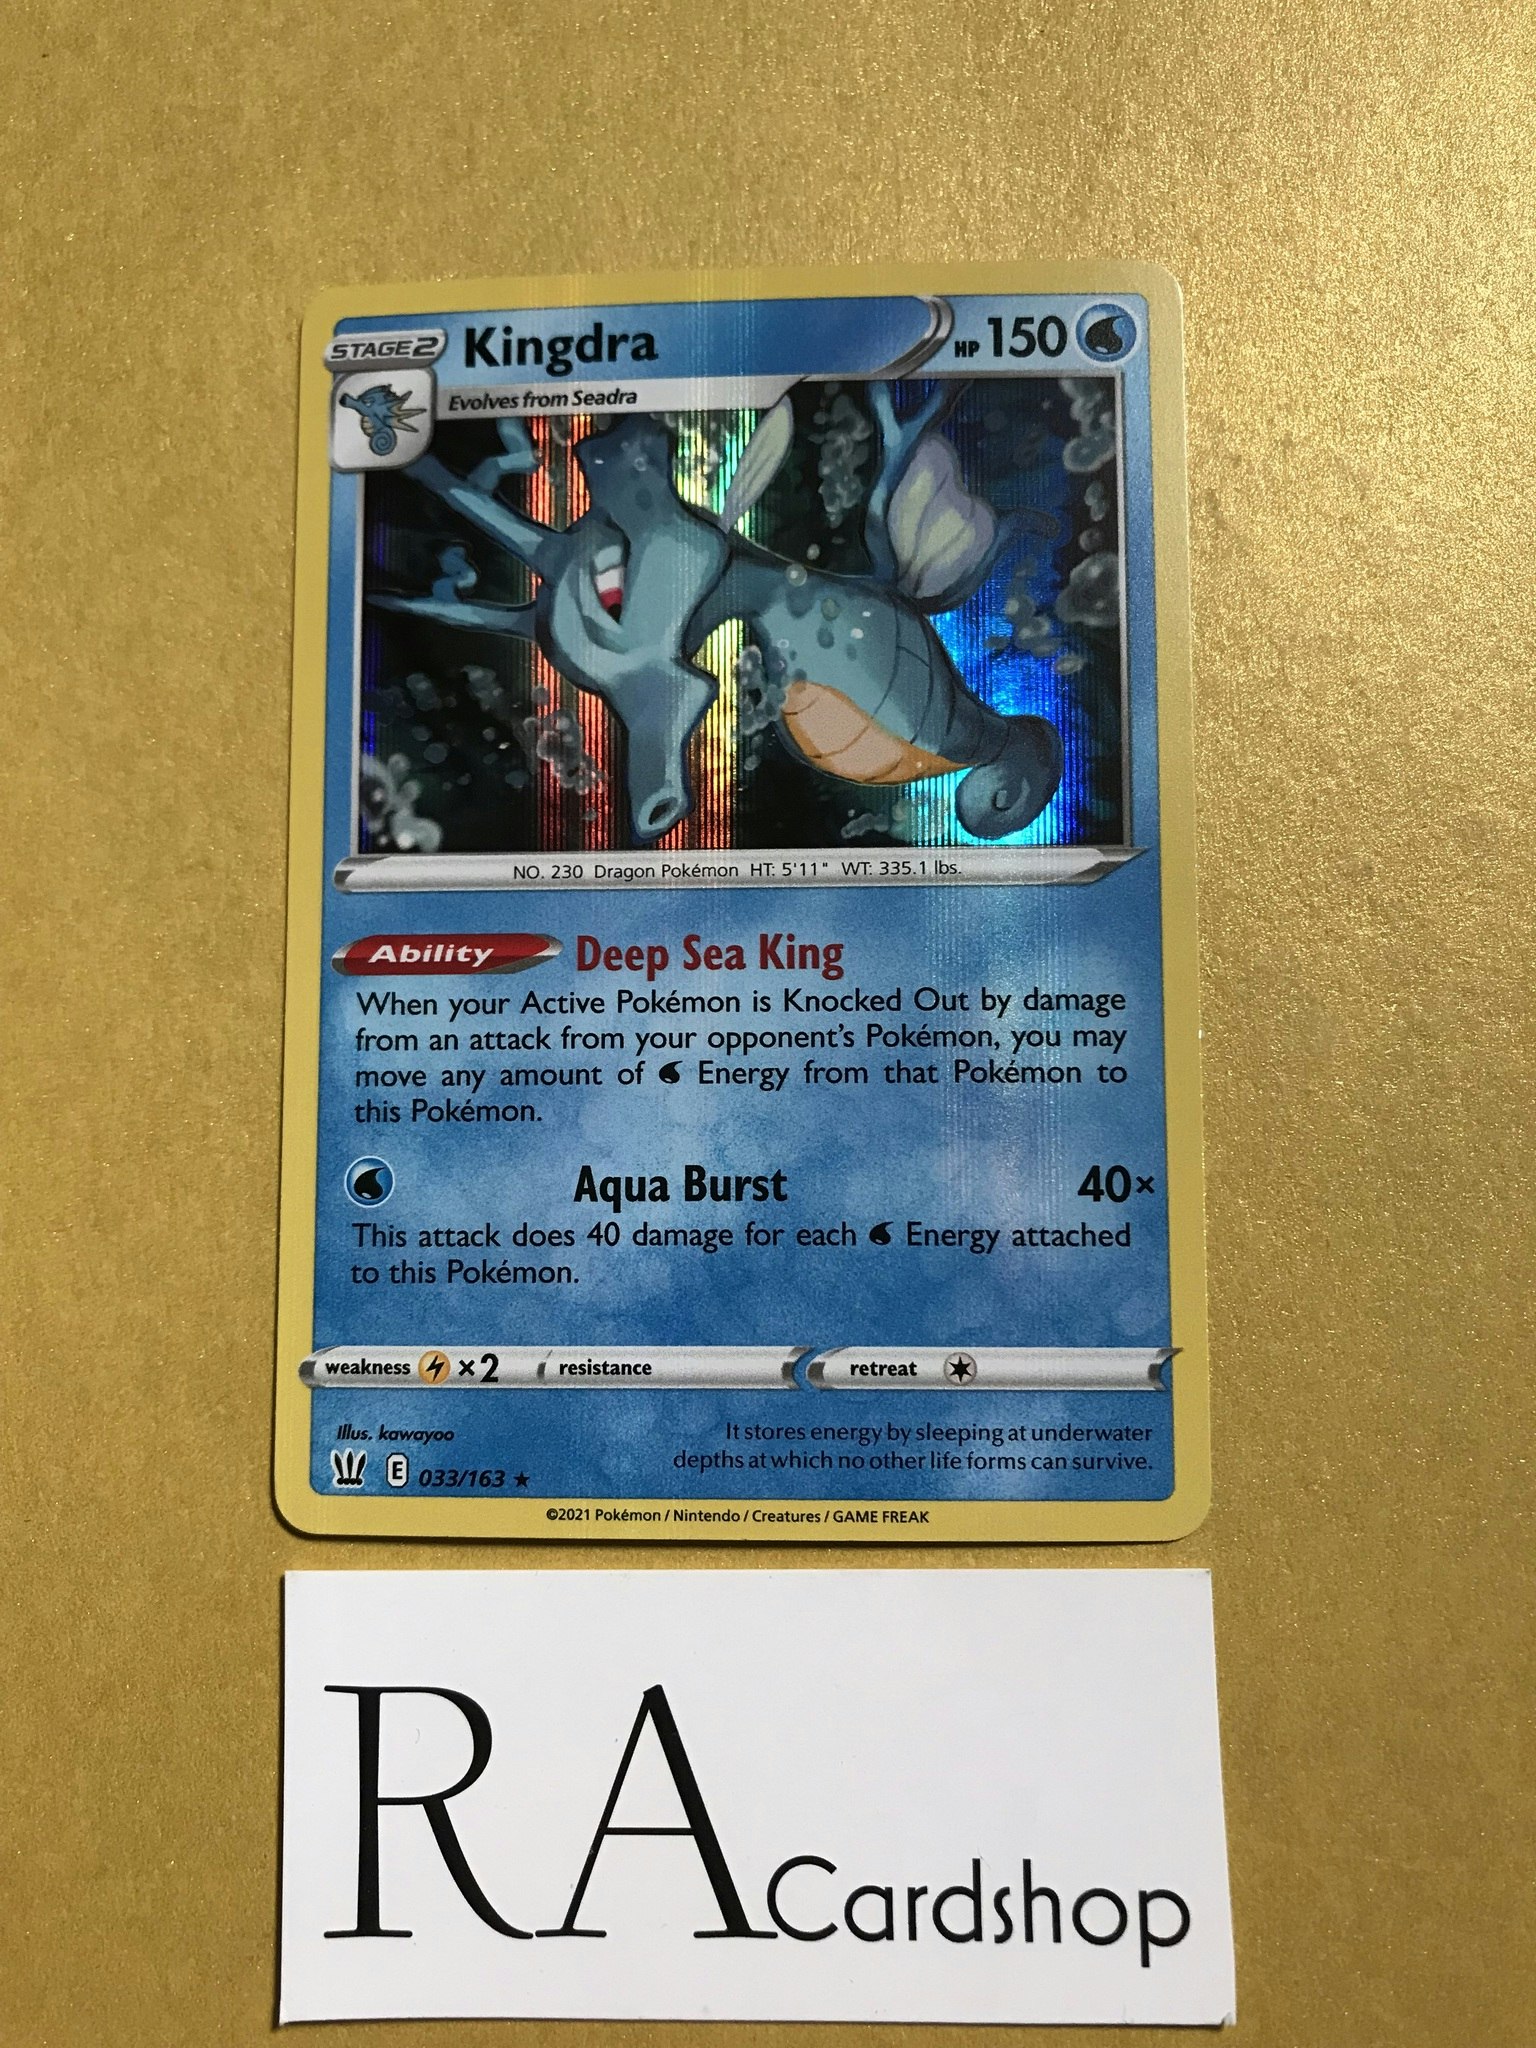 Kingdra Holo Rare 033/163 Battle Styles Pokemon